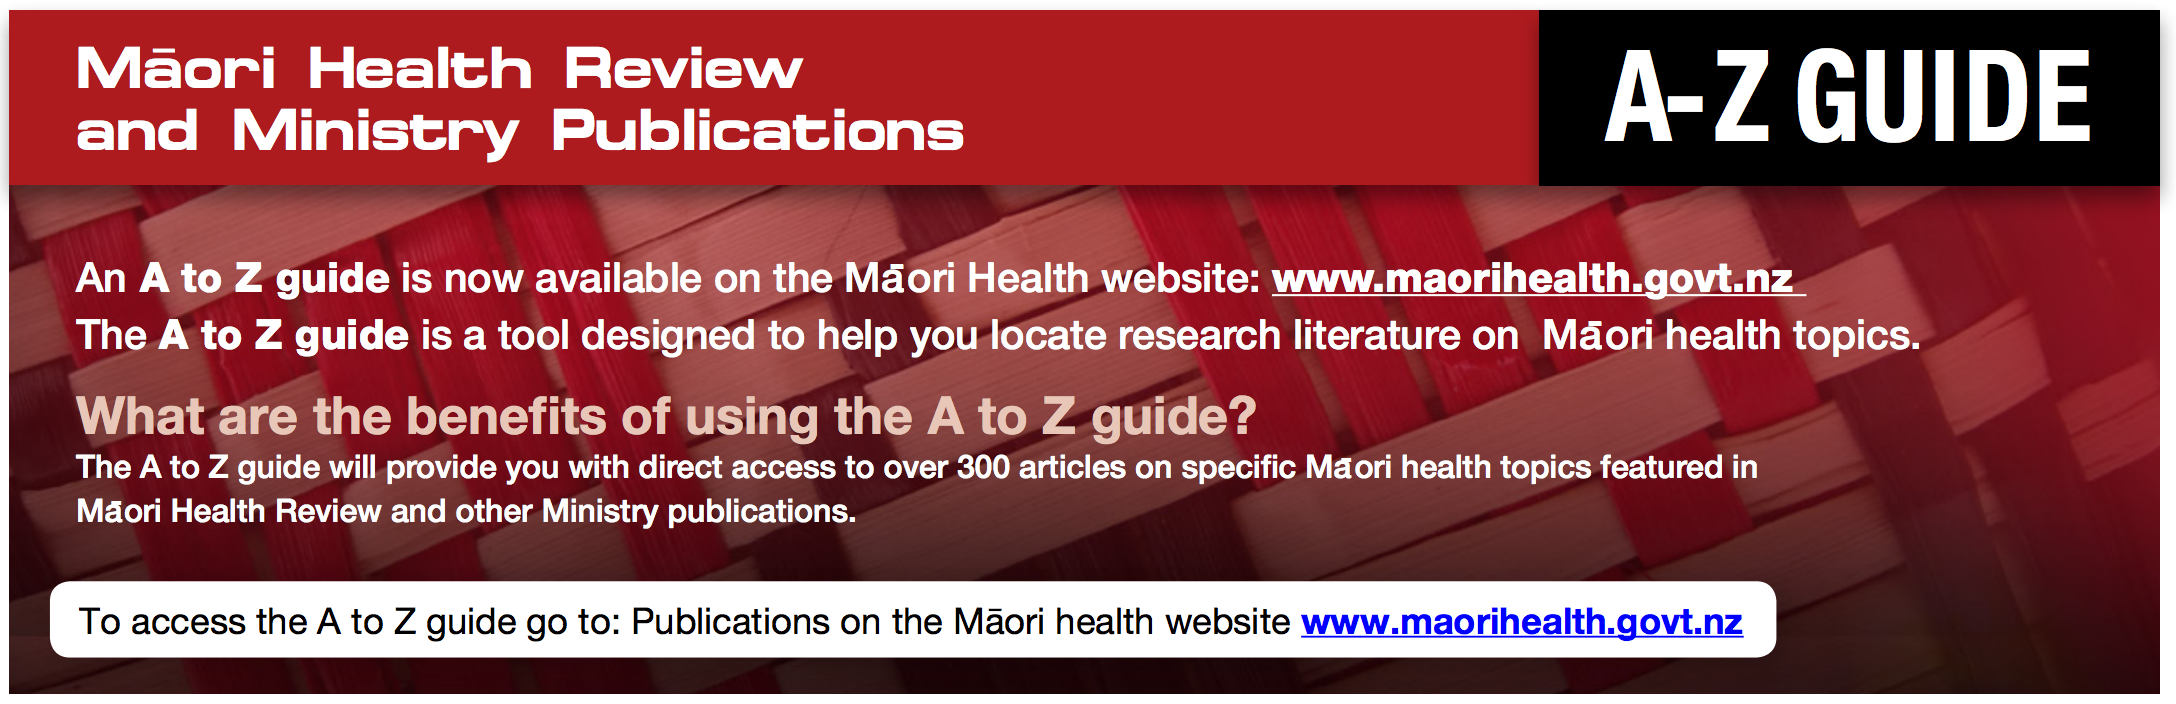 http://www.health.govt.nz/our-work/populations/maori-health